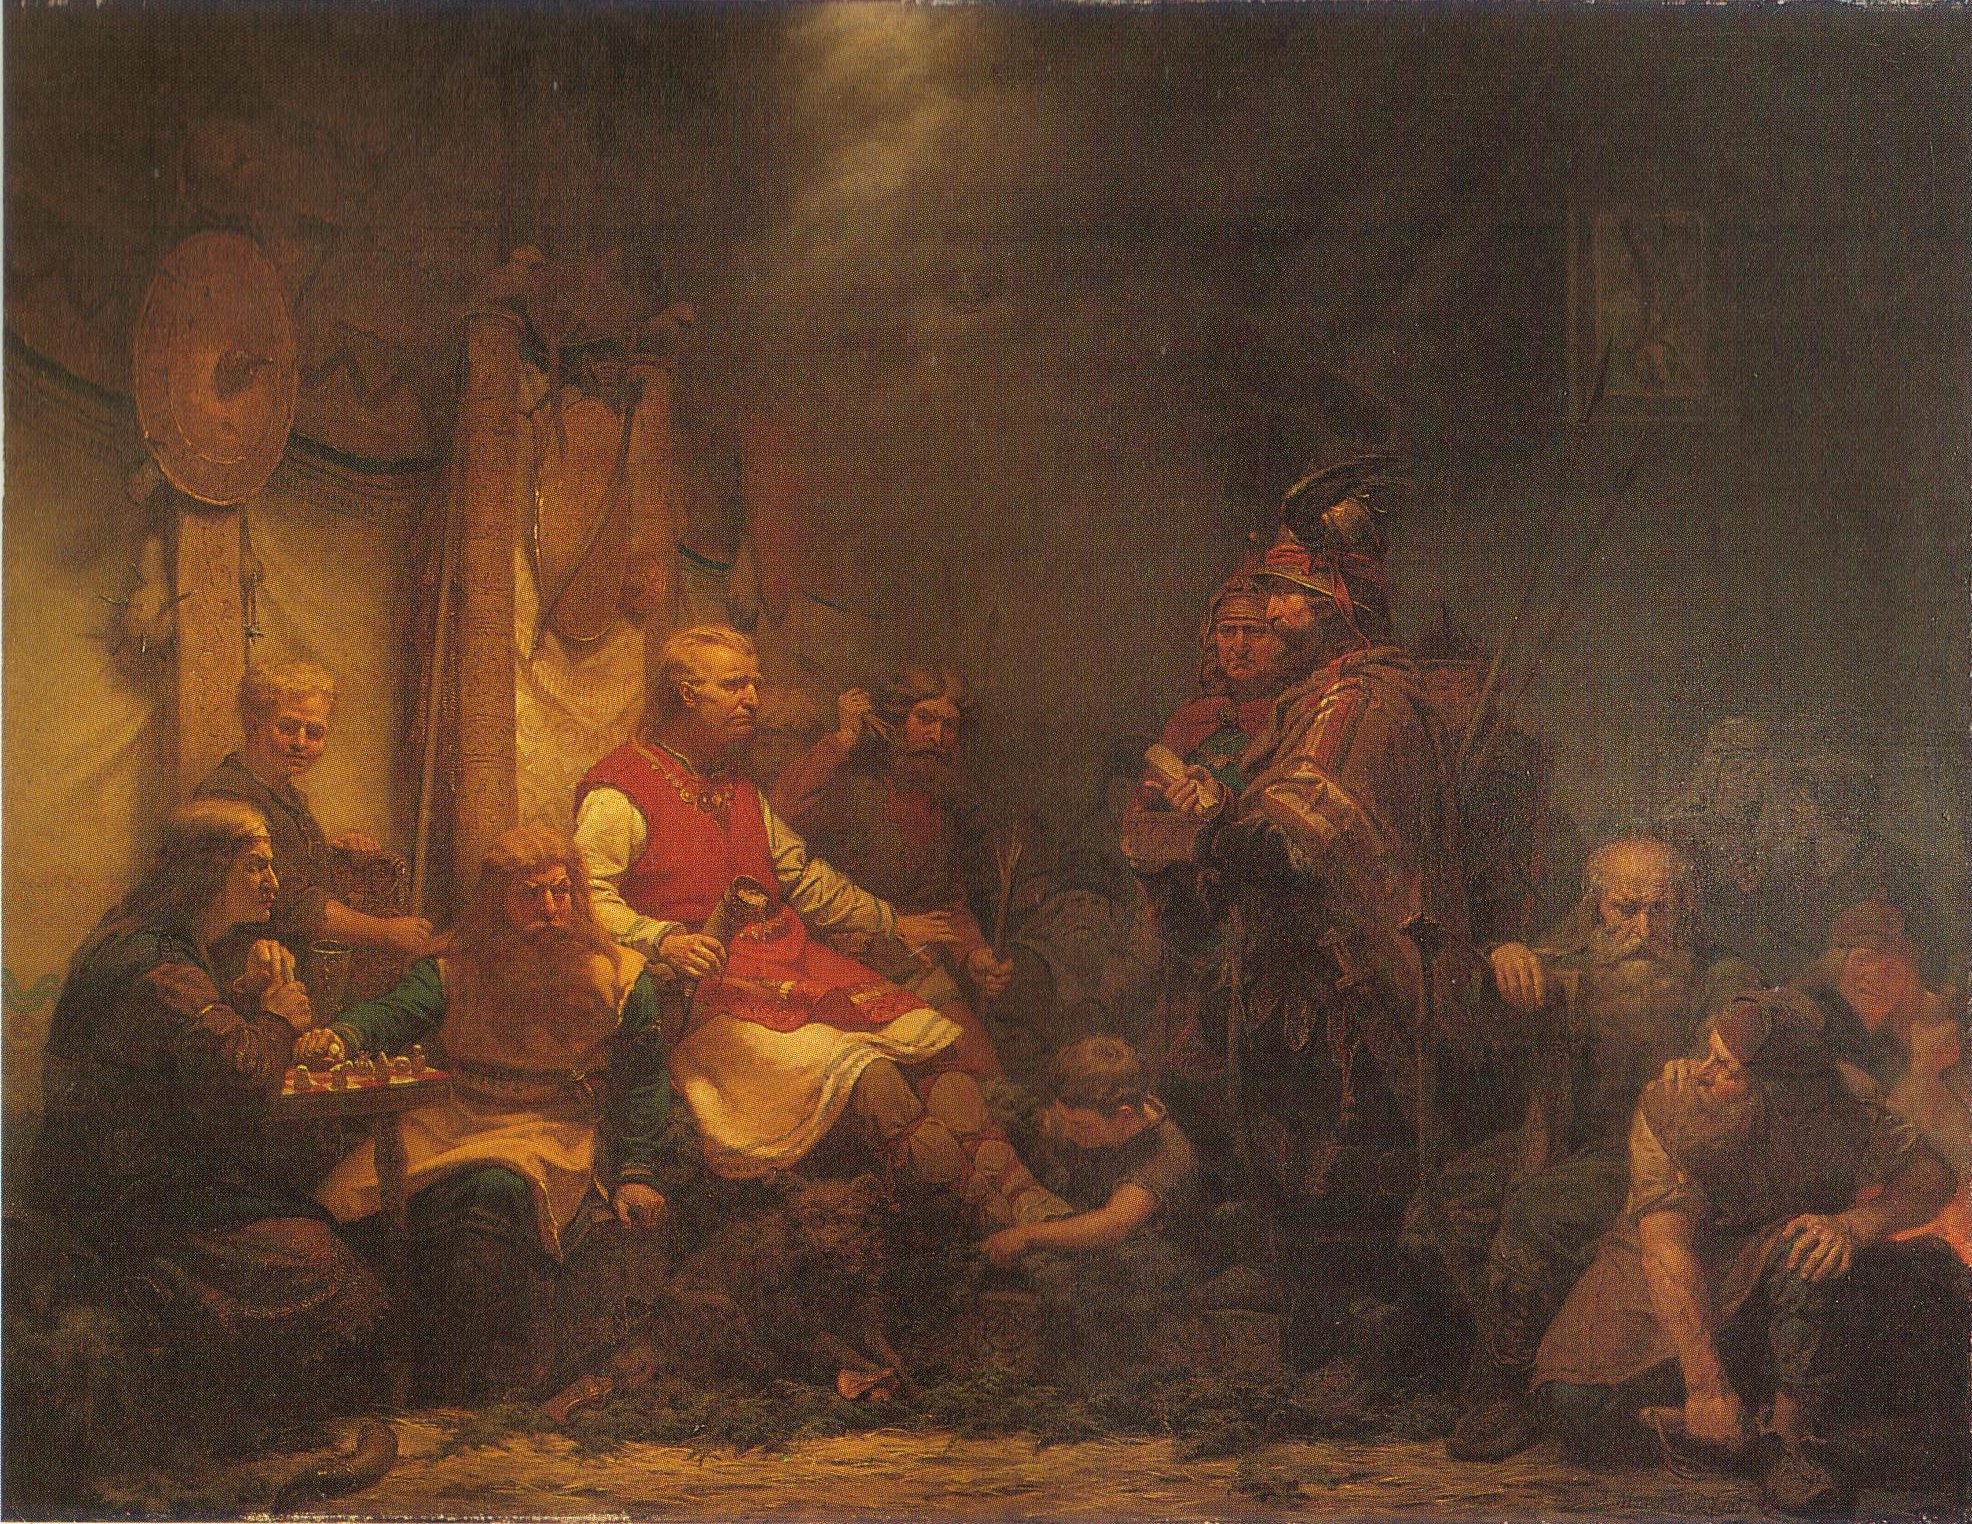 Ragnar deciding on the life of his son Ivar Boneless.